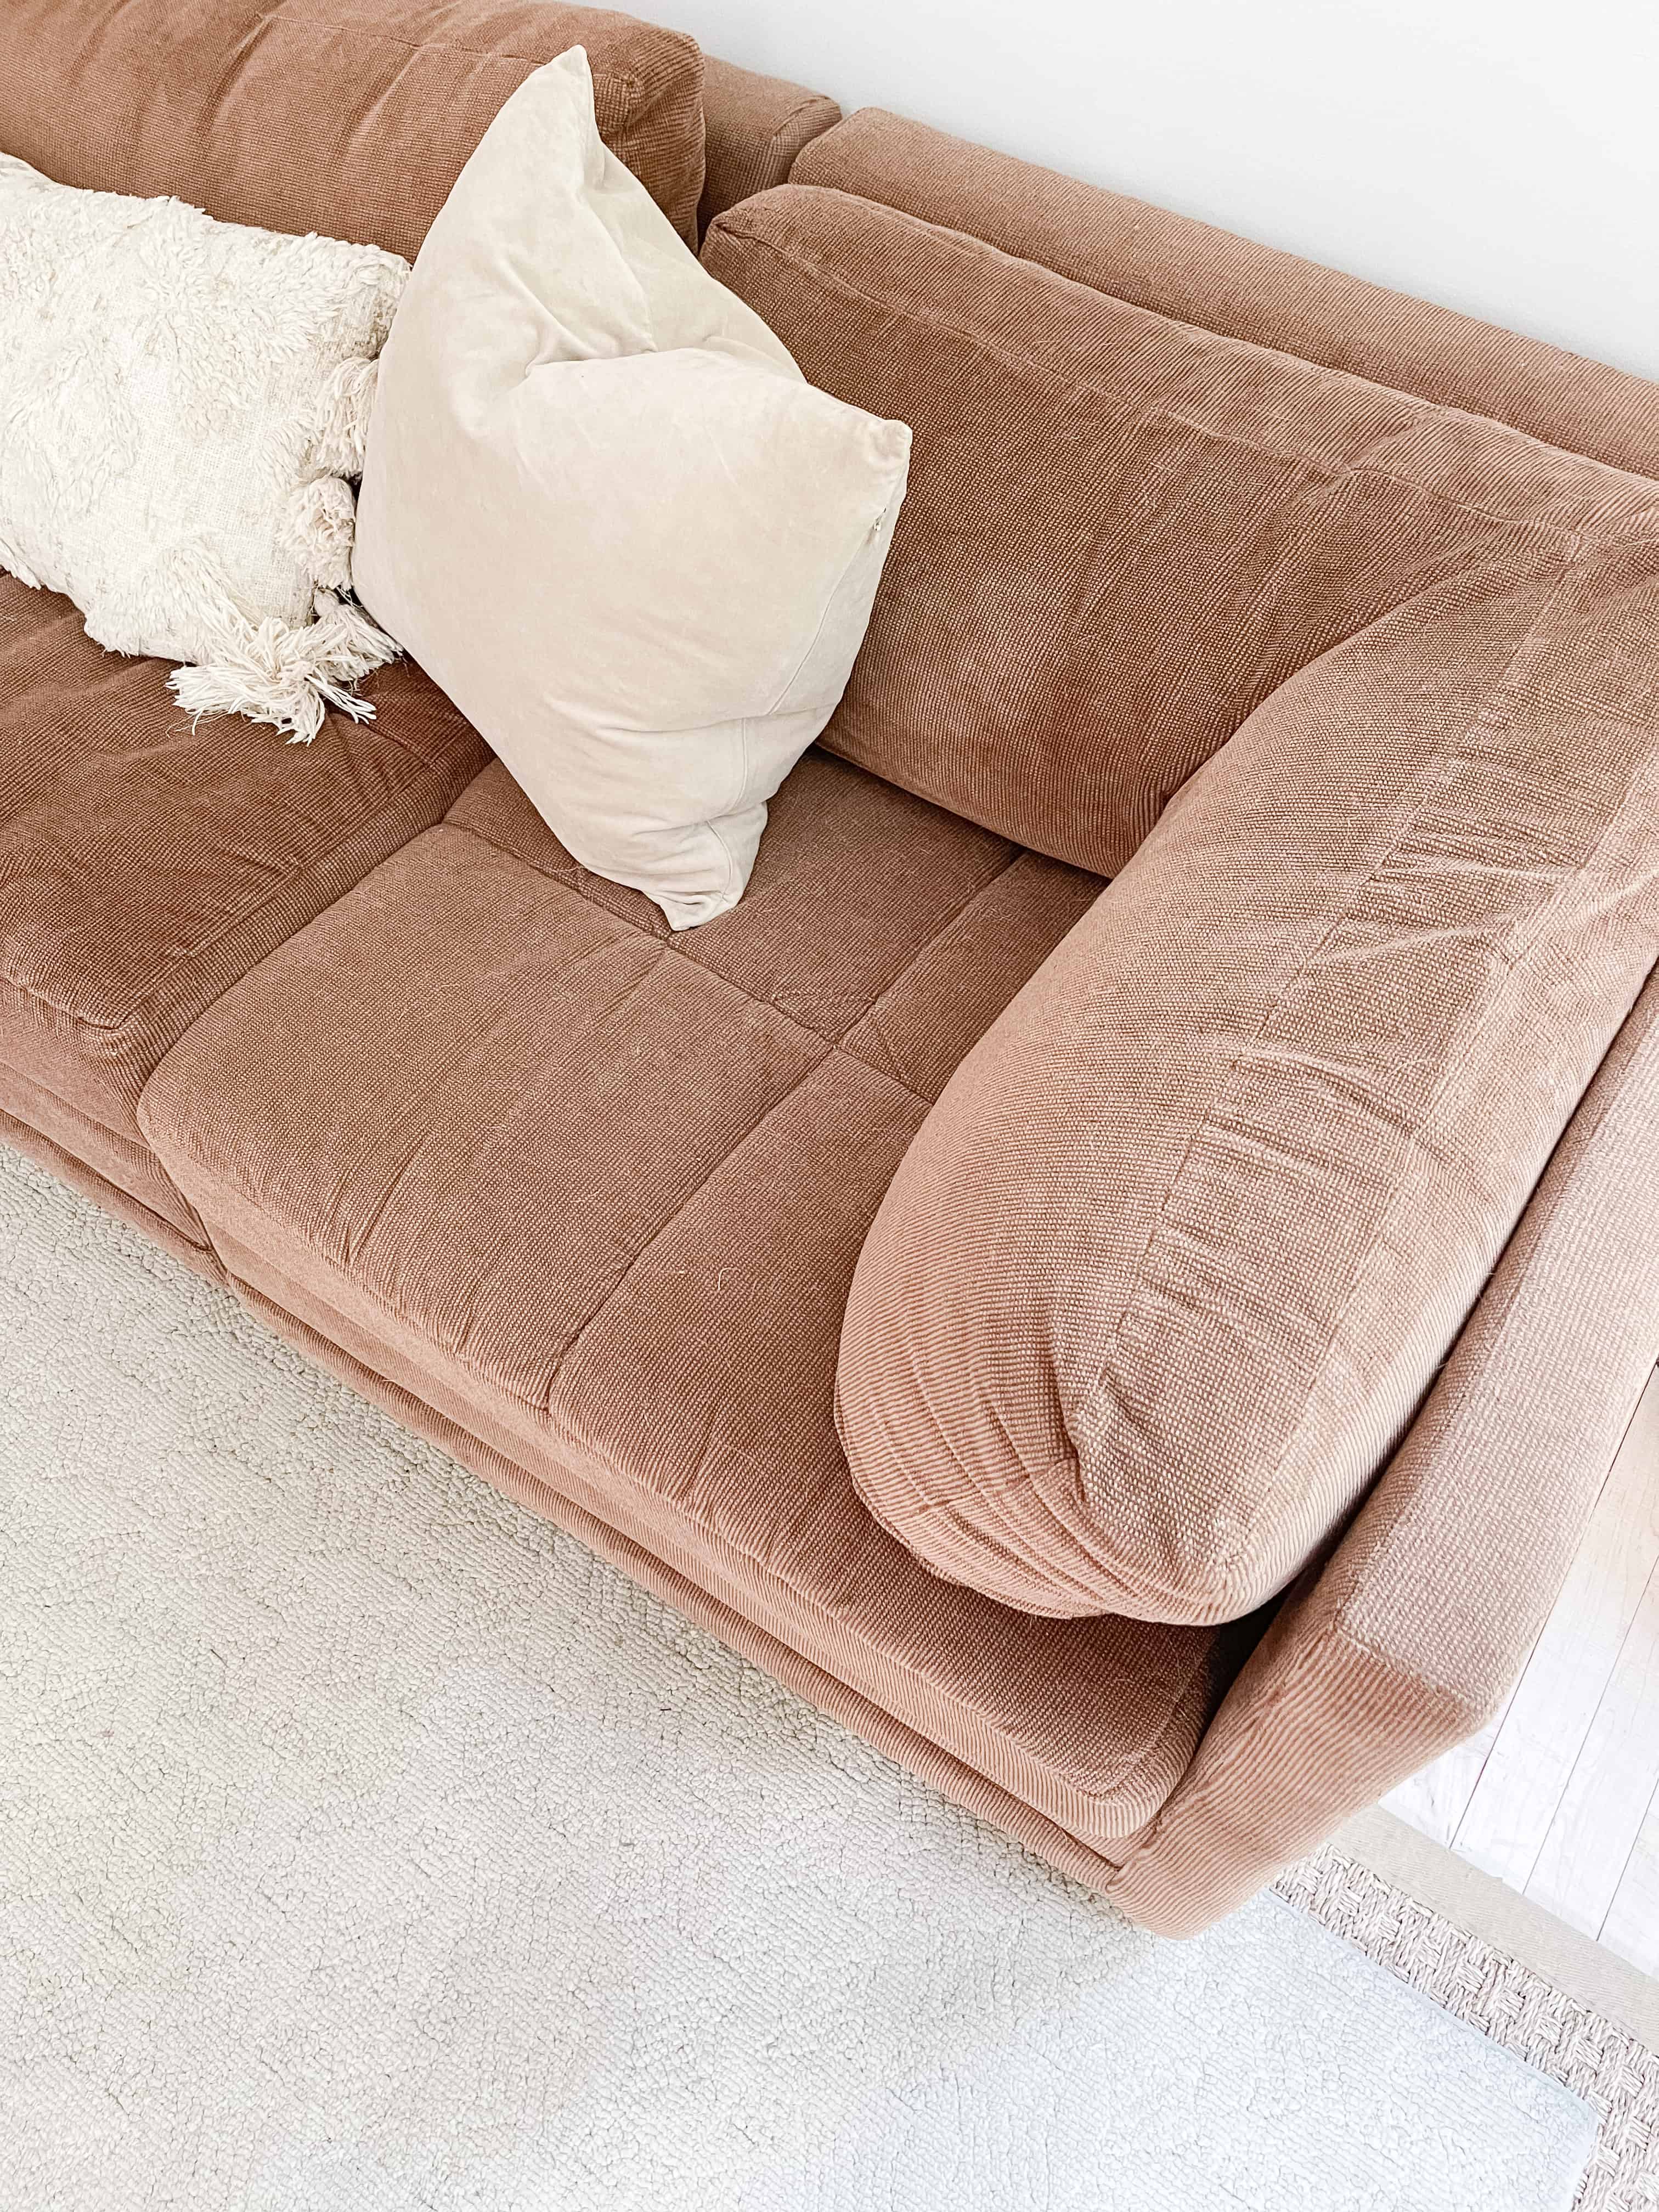 terra cotta vintage sofa